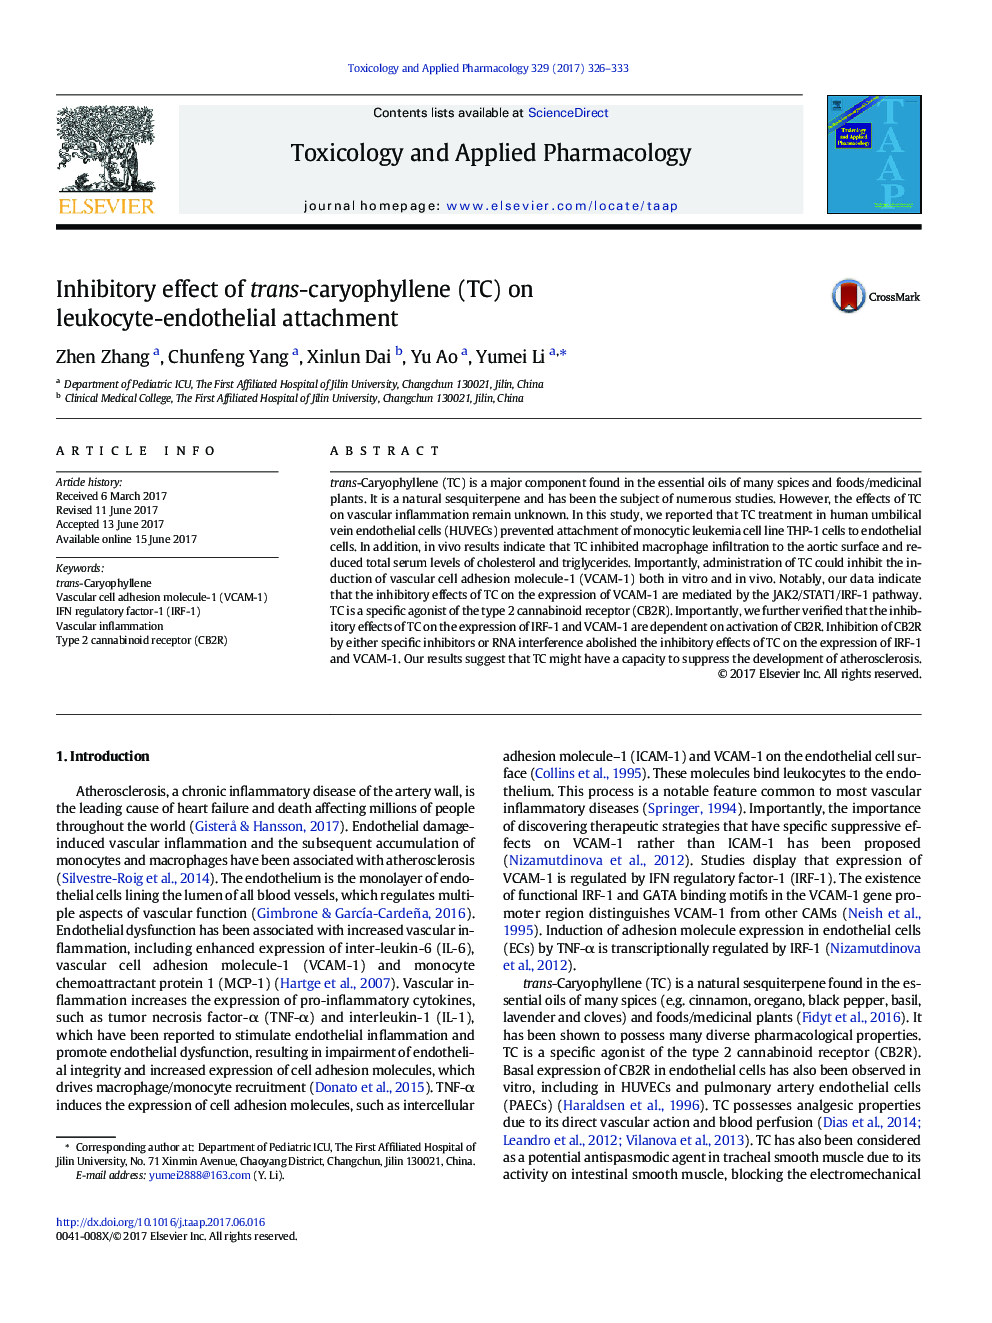 Inhibitory effect of trans-caryophyllene (TC) on leukocyte-endothelial attachment